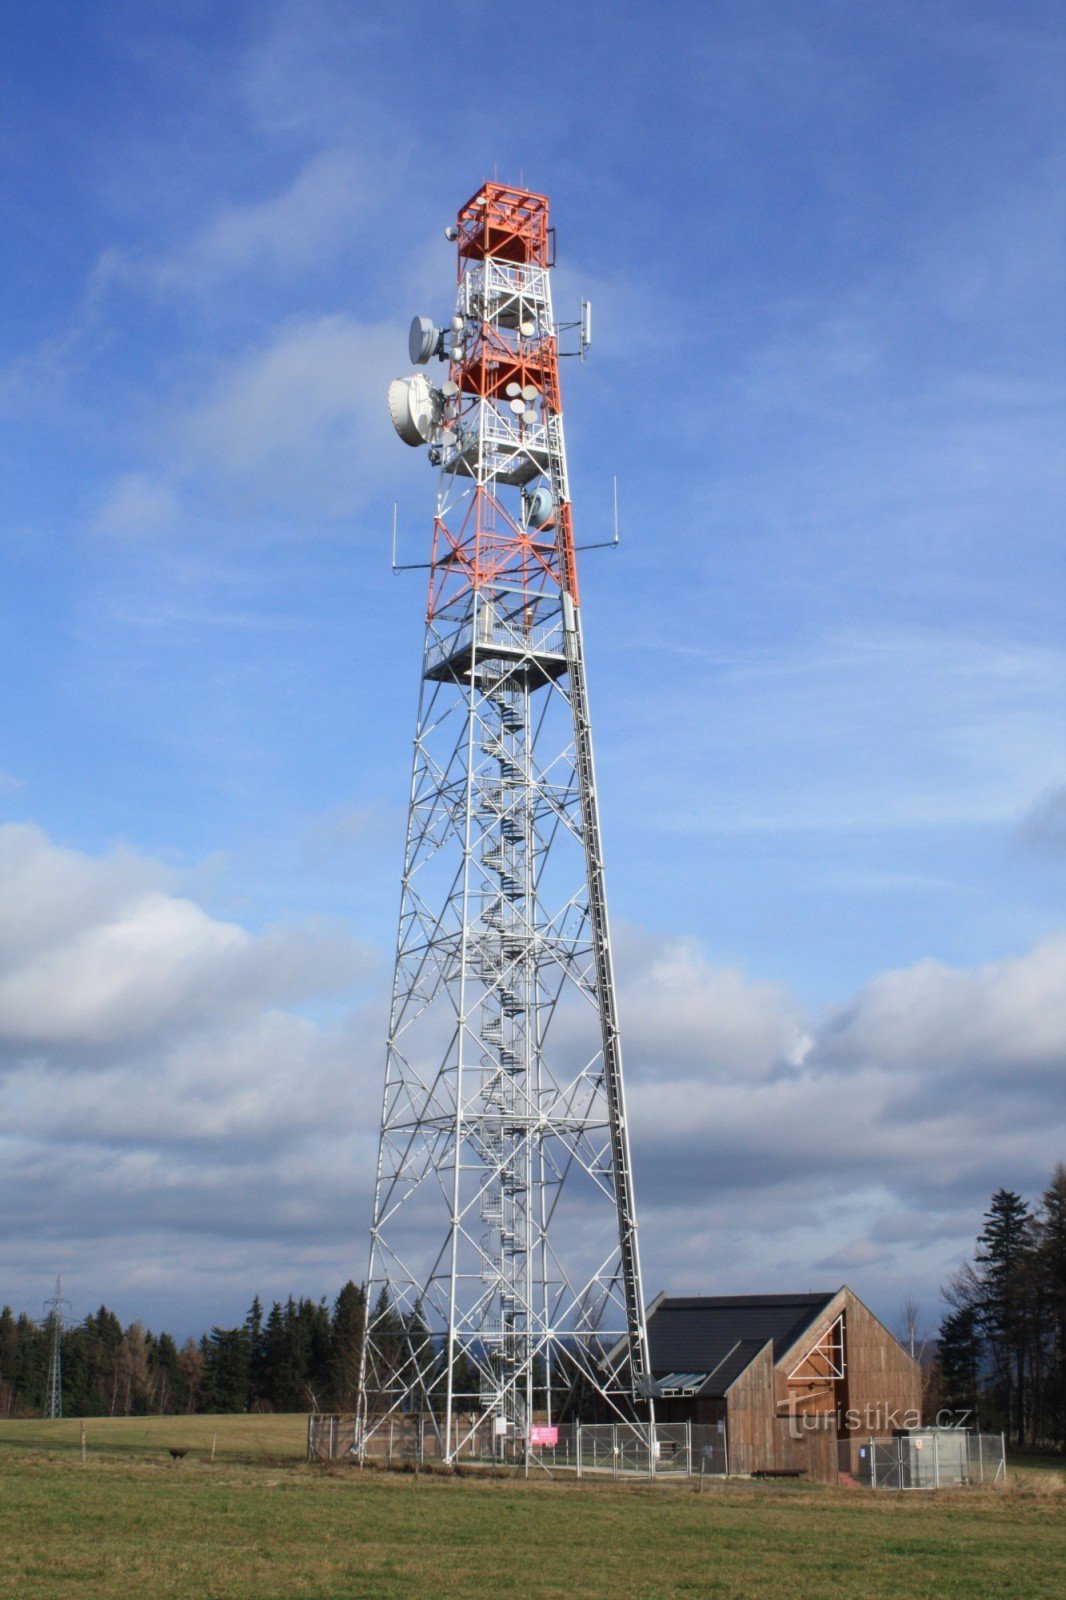 Kozlovský hill - lookout tower